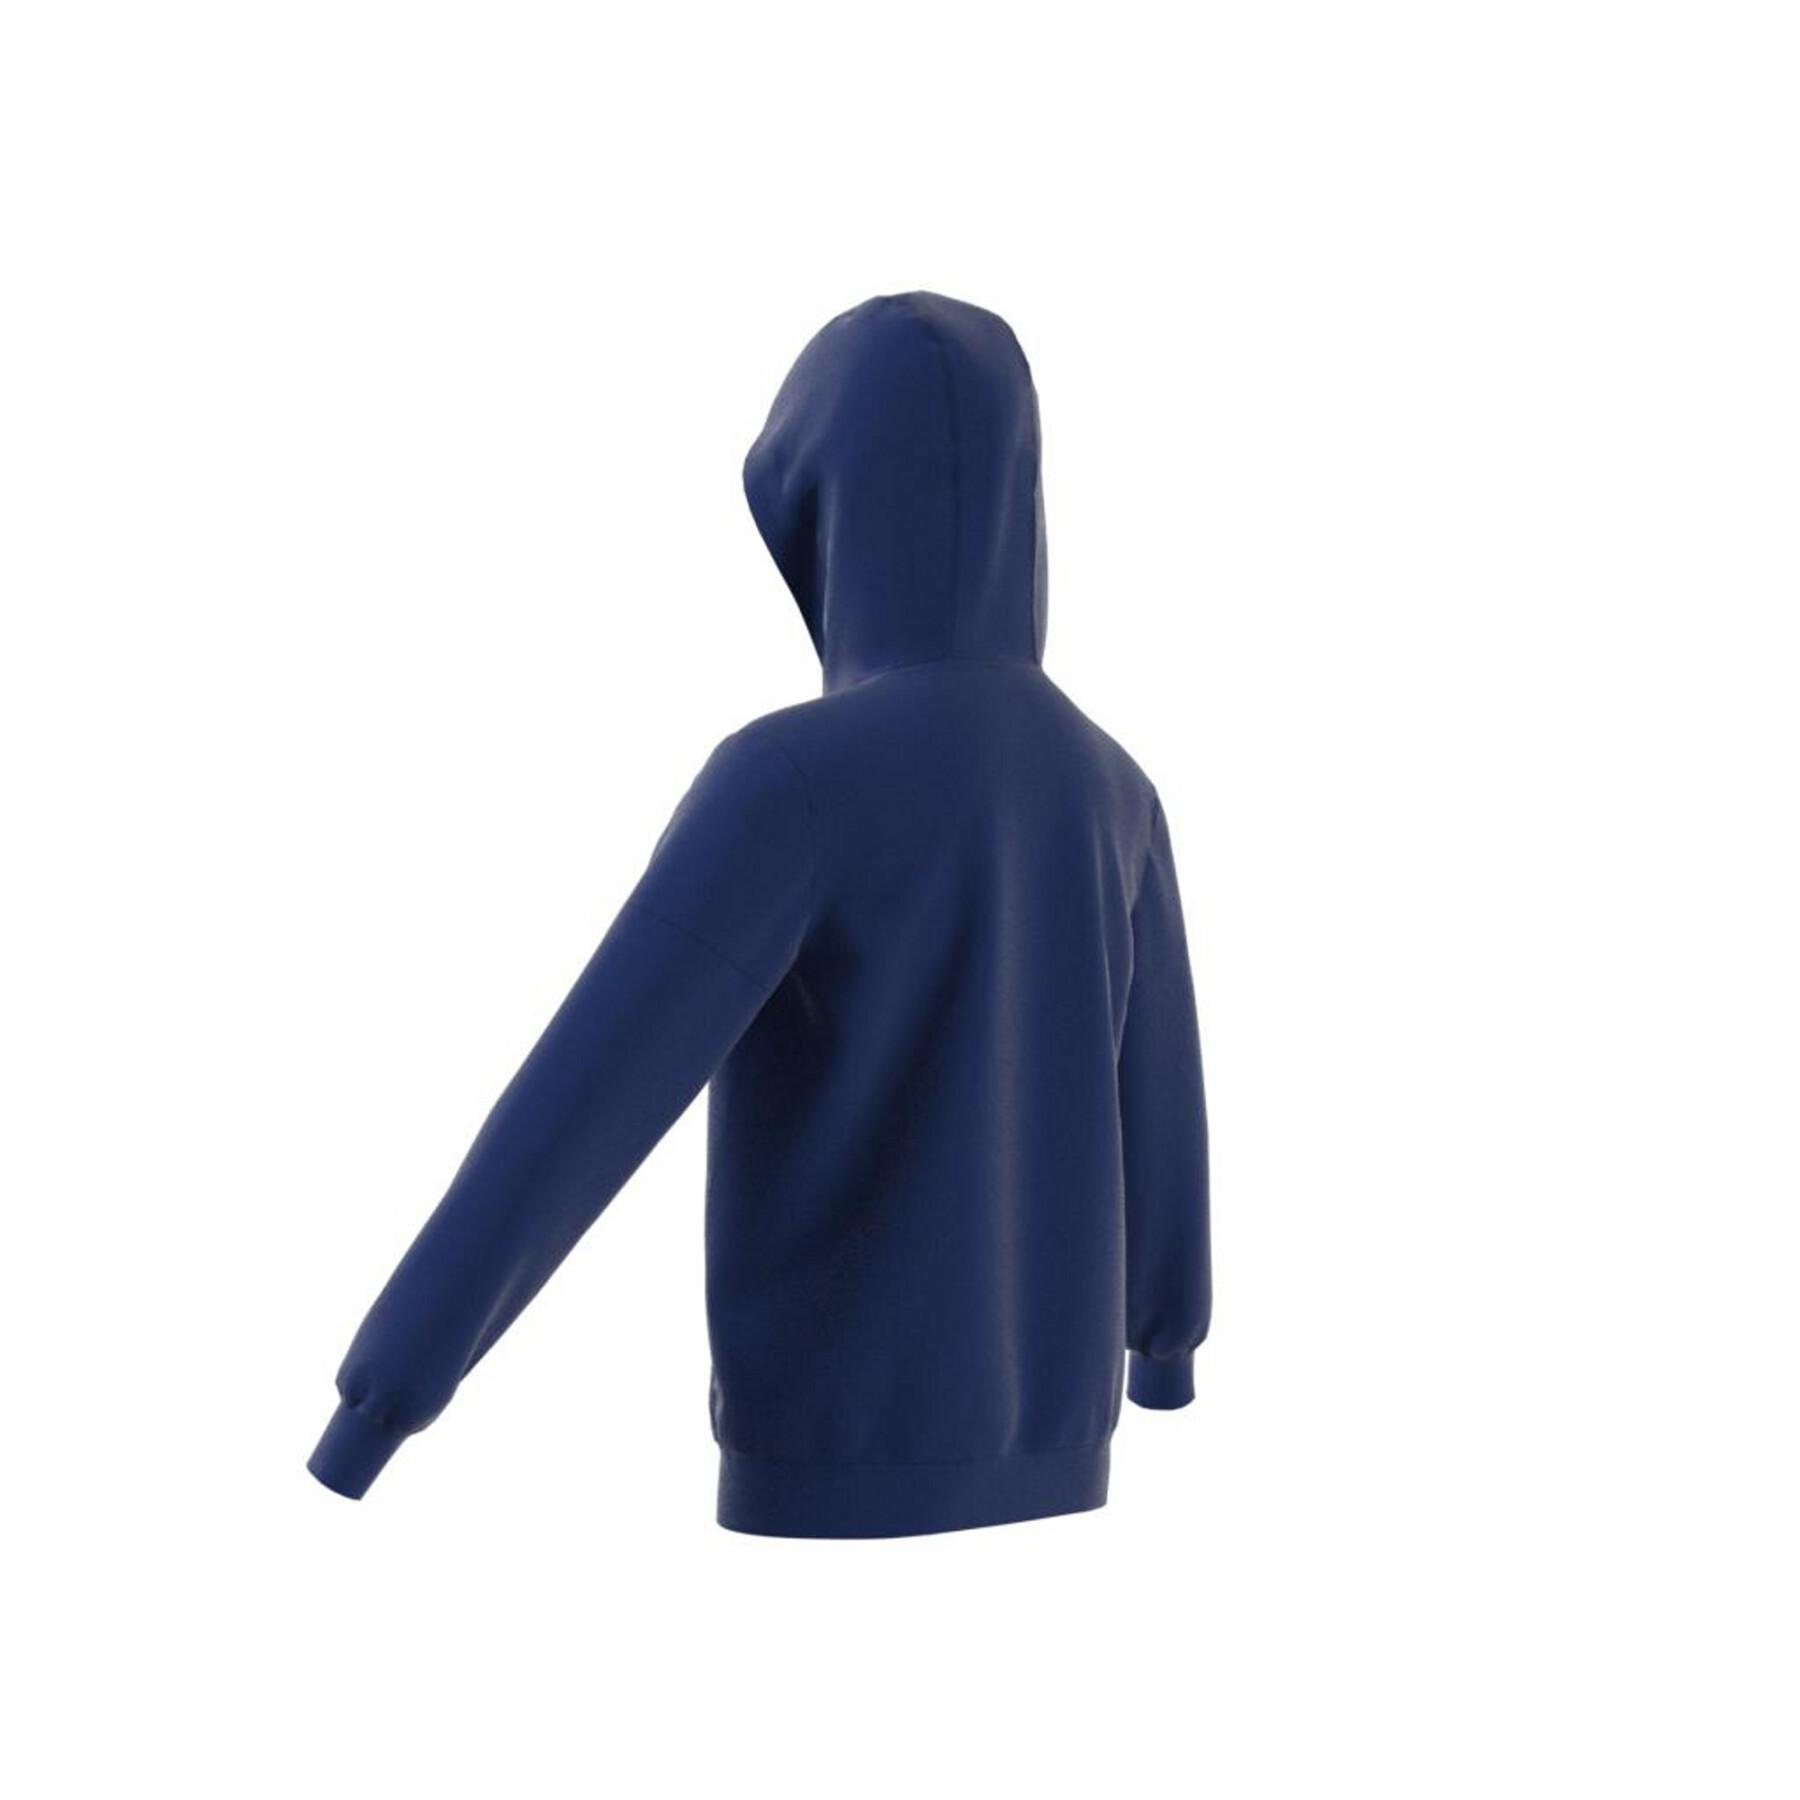 Kinder-Kapuzen-Sweatshirt adidas Badge Of Sport Fleece